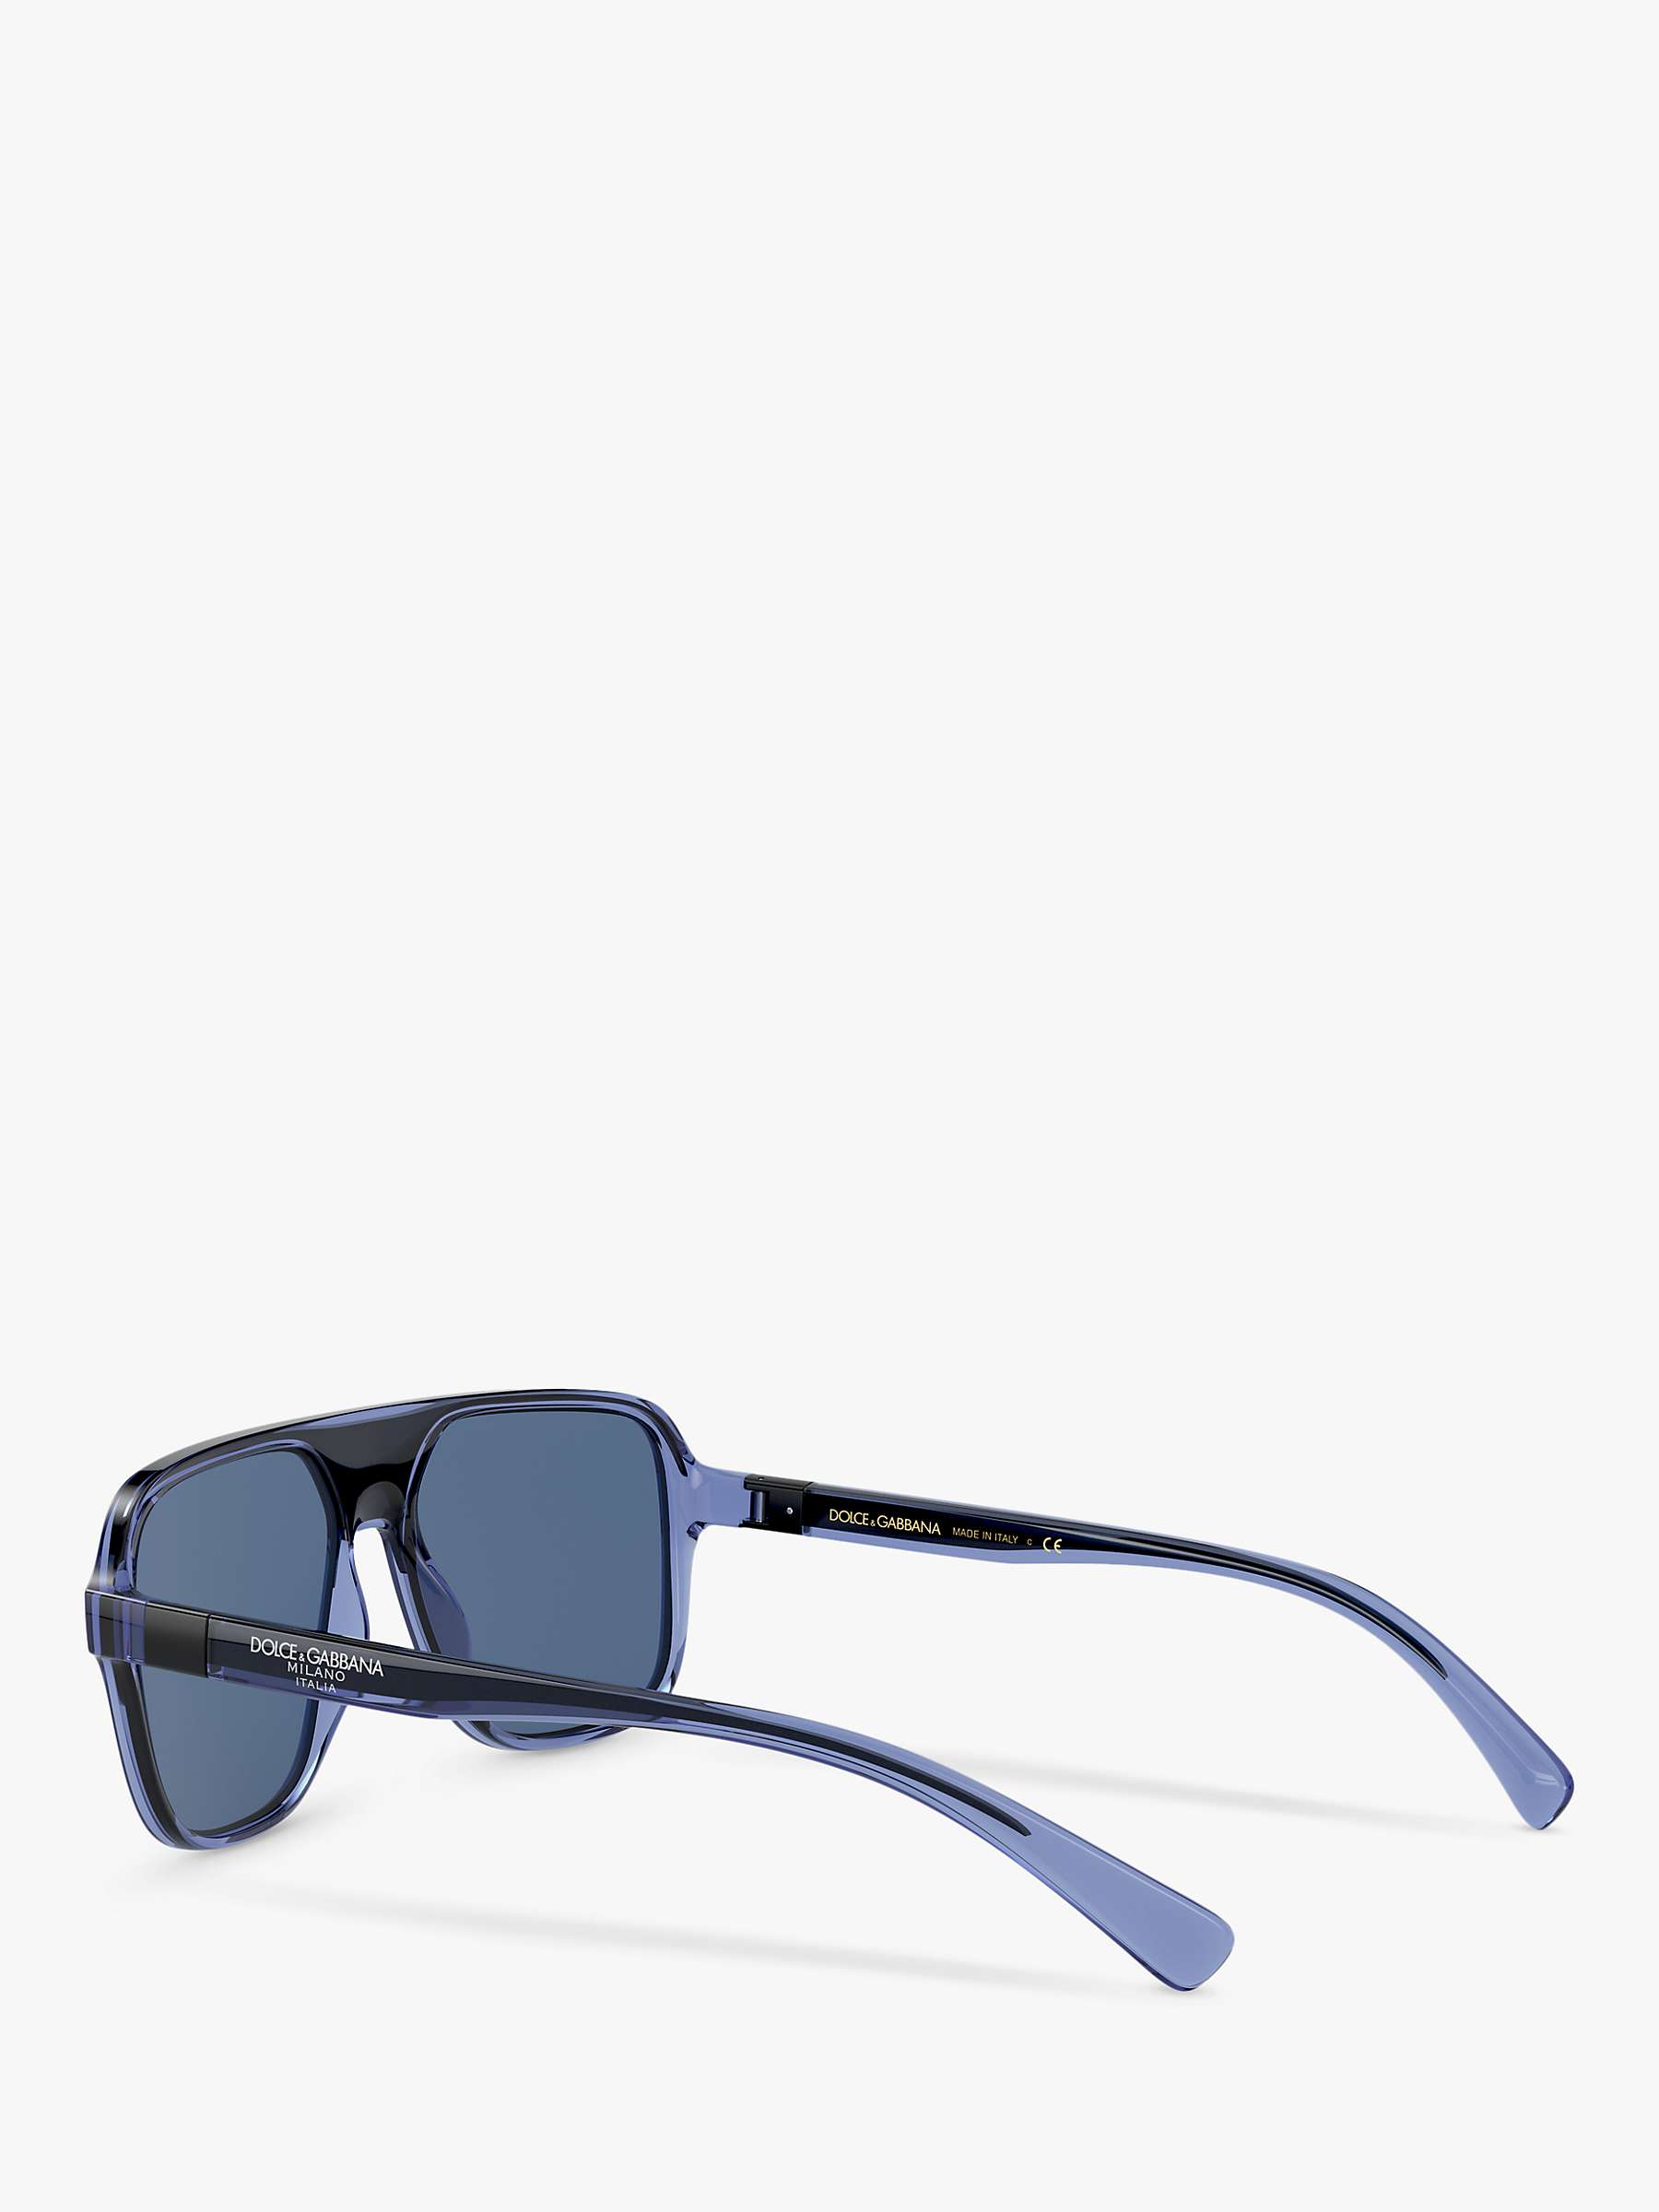 Buy Dolce & Gabbana DG6134 Men's Square Sunglasses Online at johnlewis.com